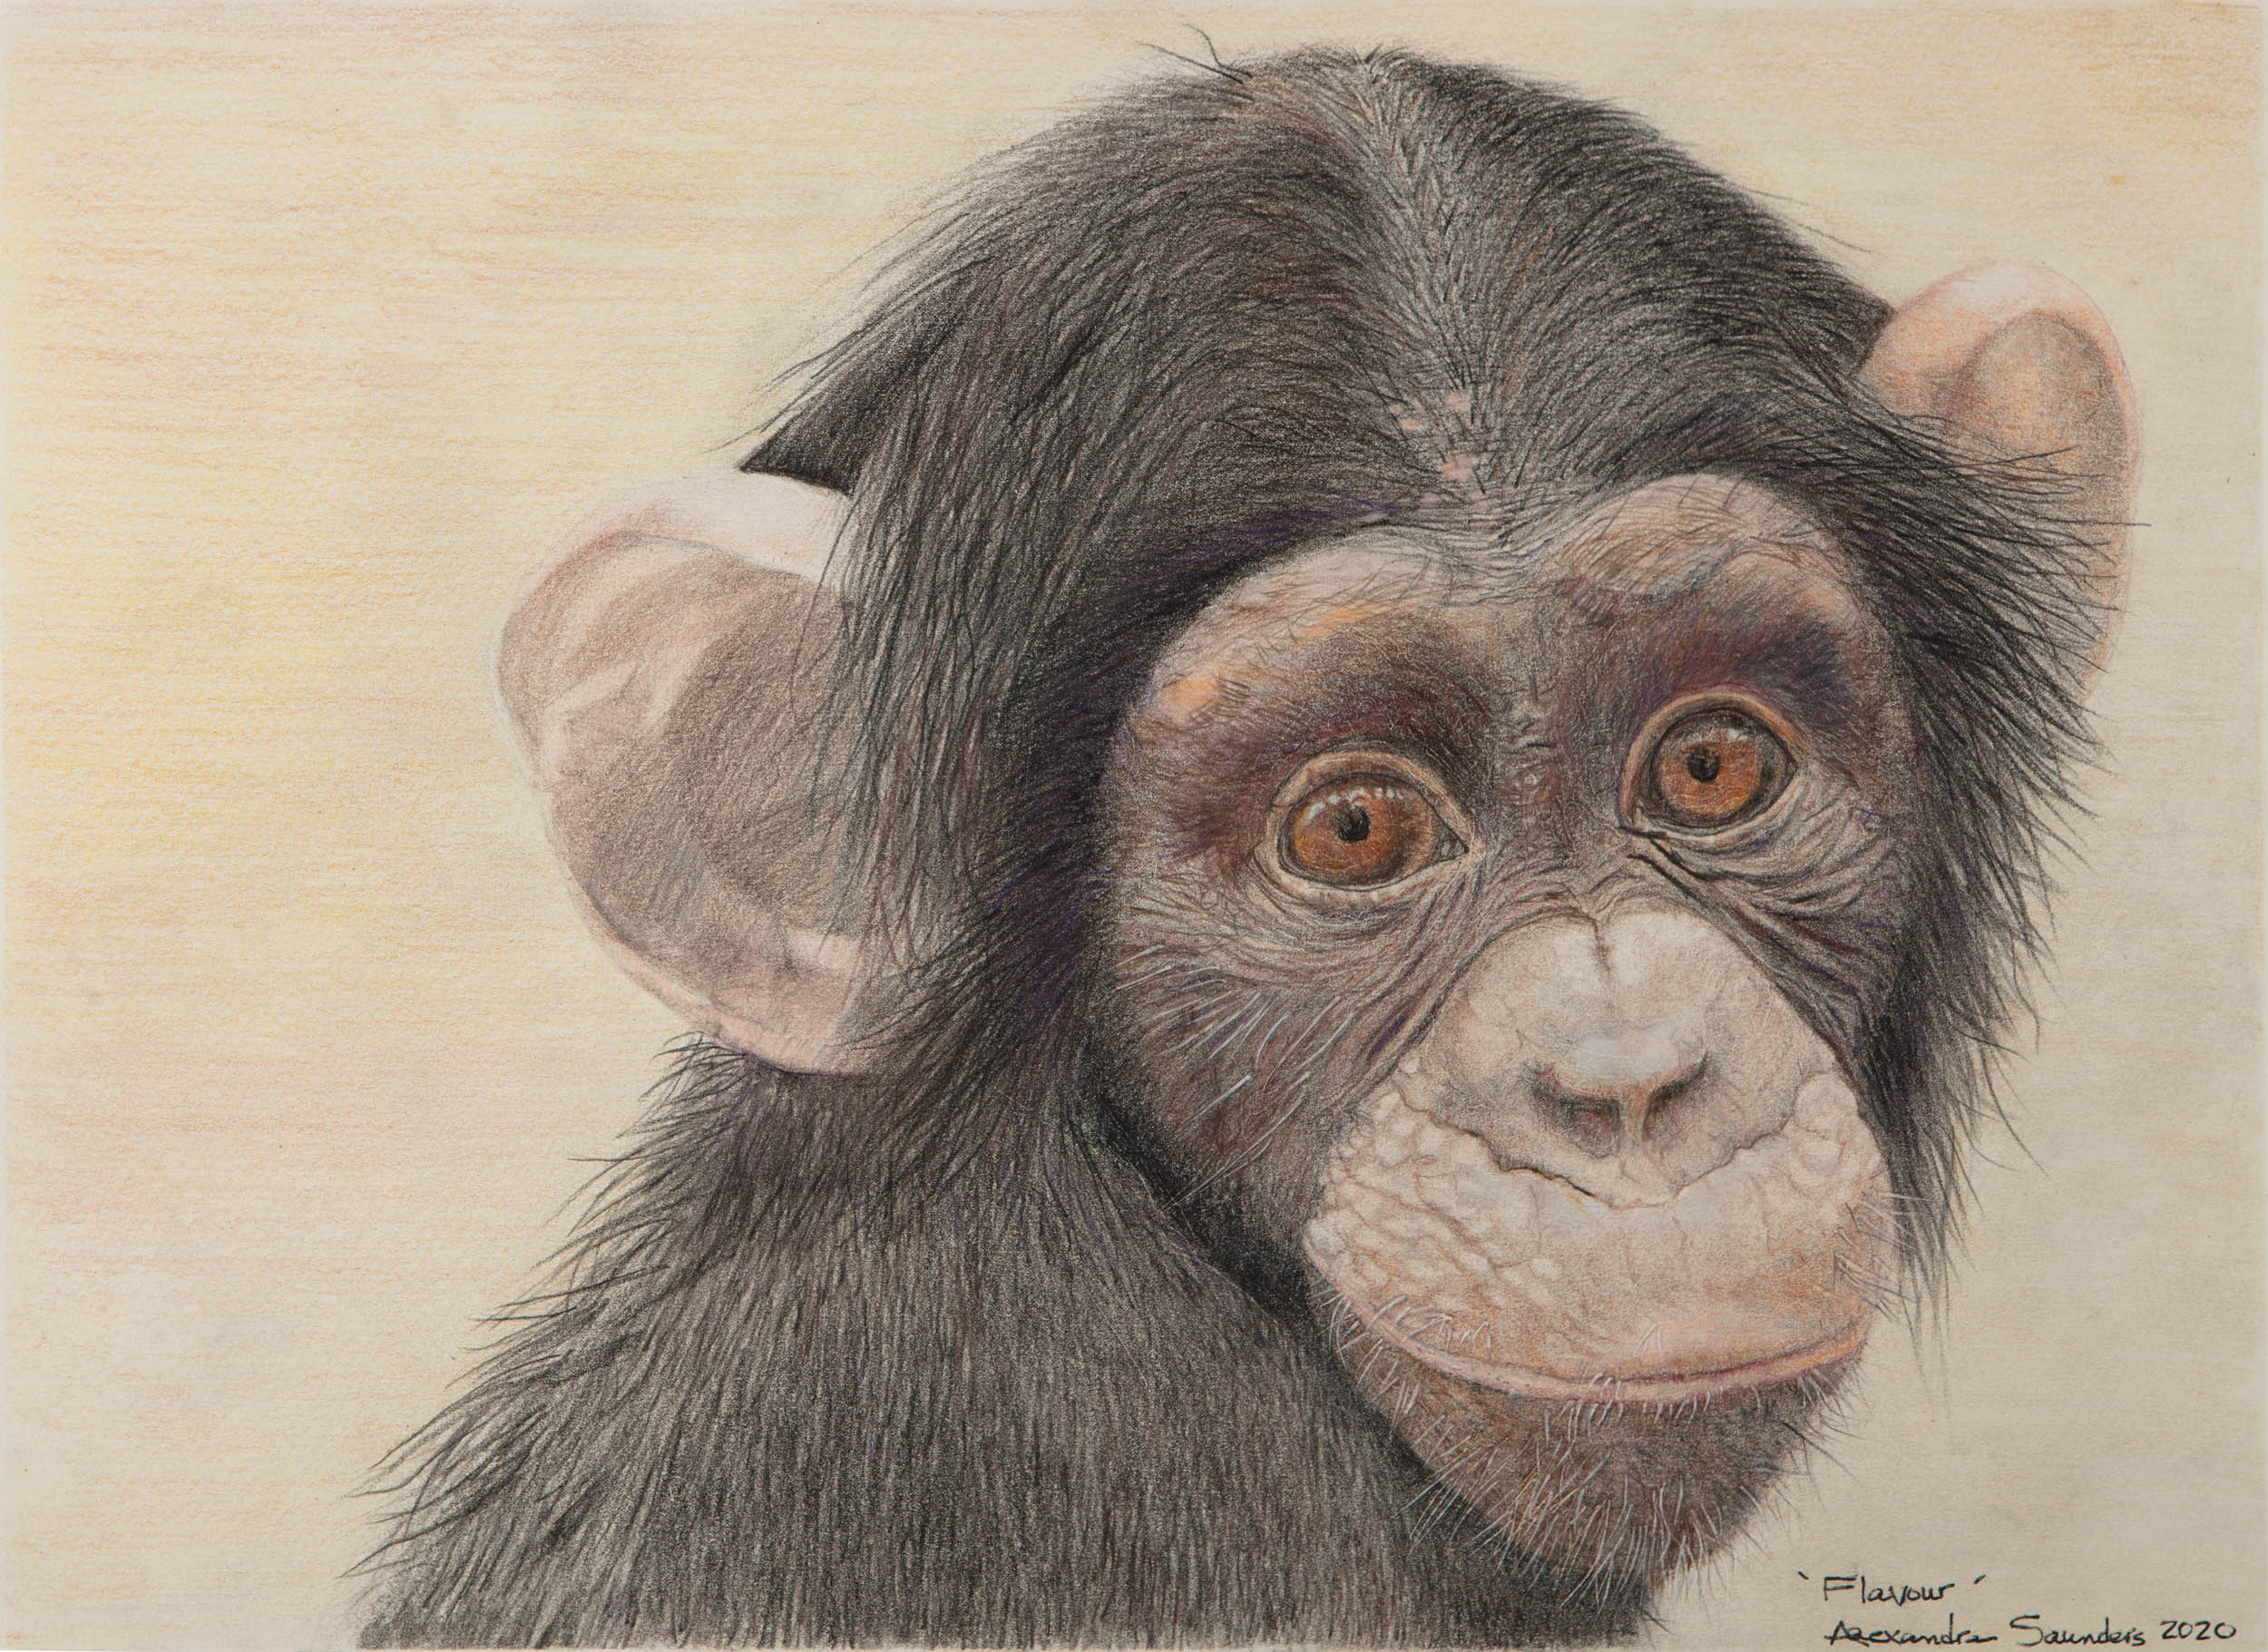 Western chimpanzee babyeyes ziyrjx